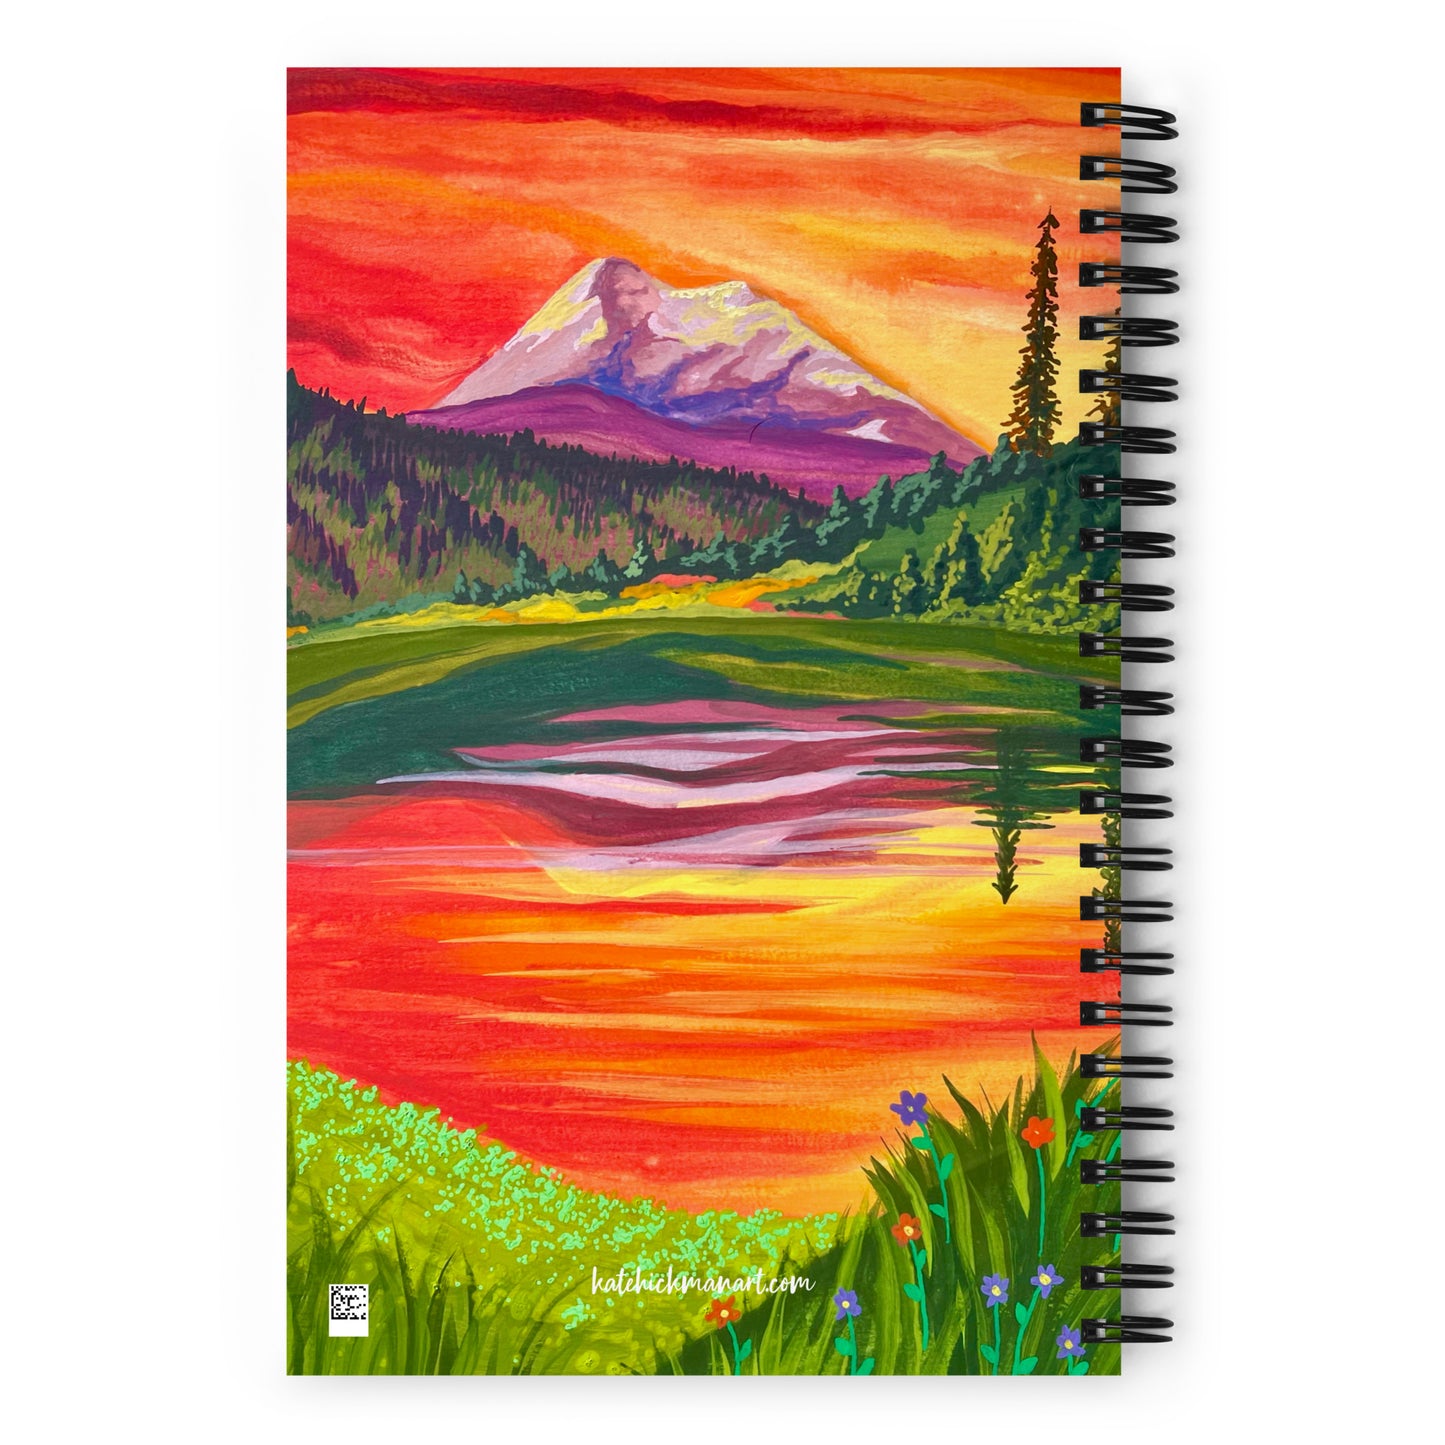 Mount Rainier National Park Notebook